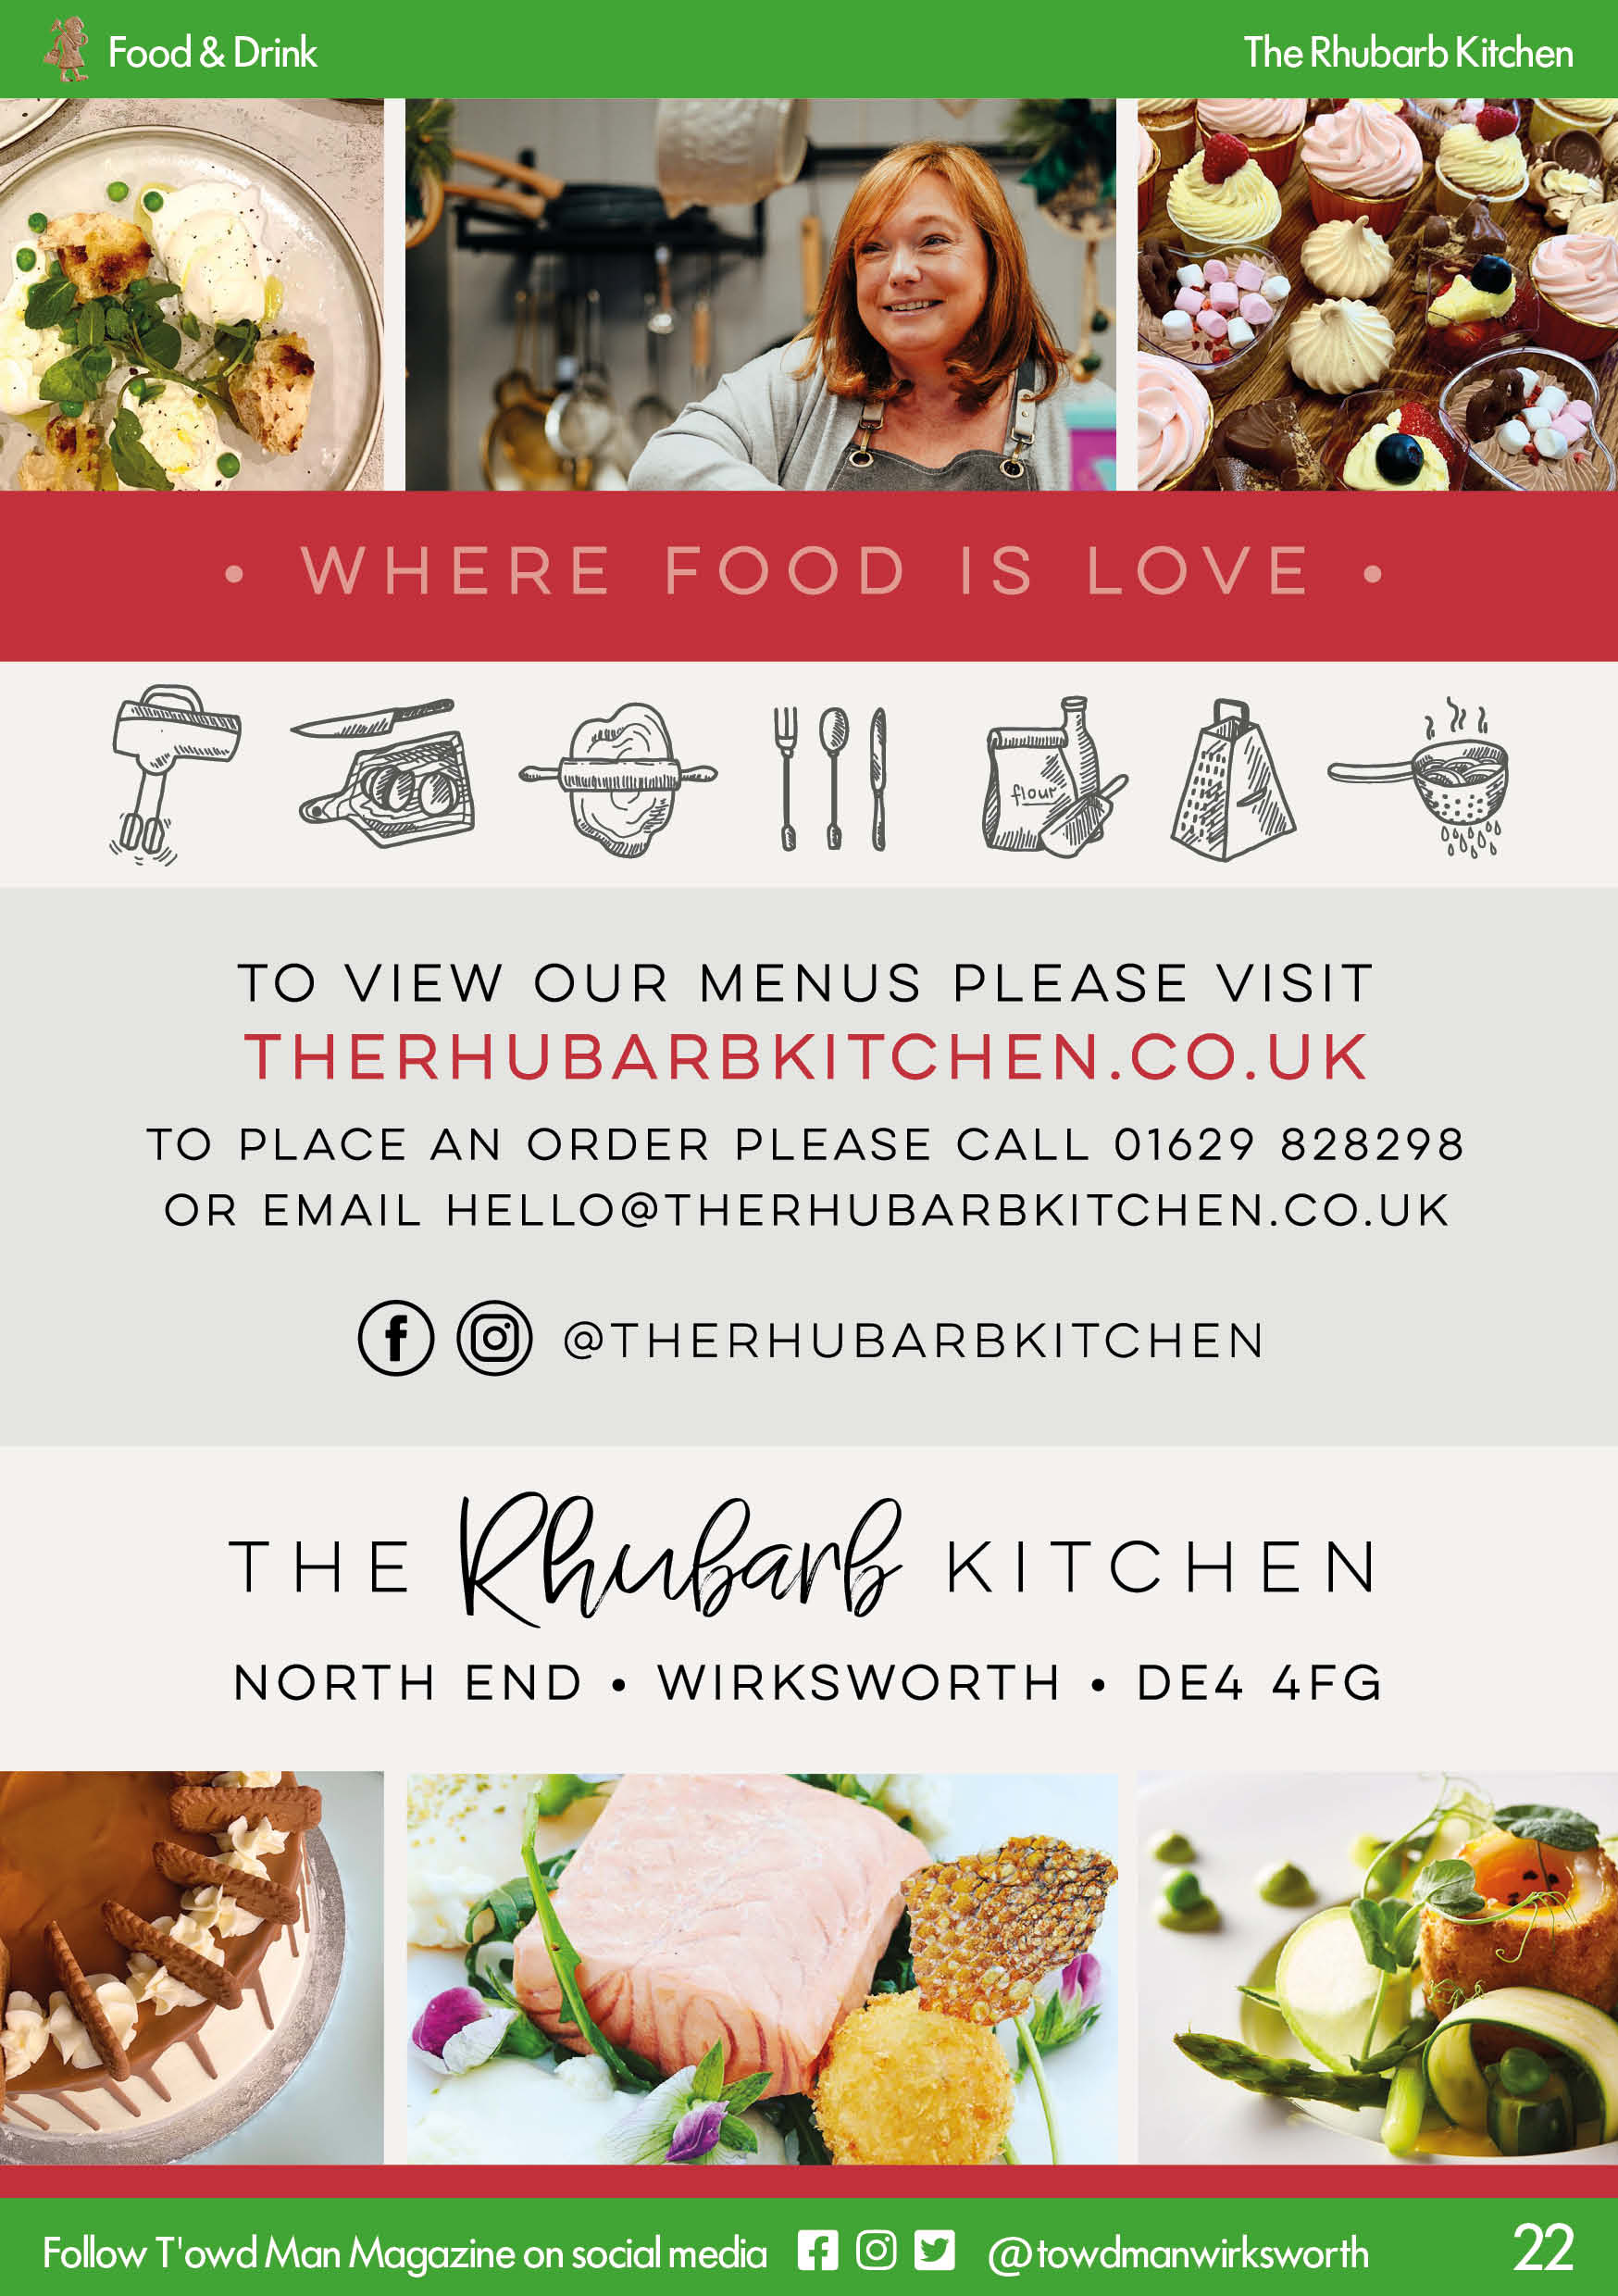 The Rhubarb Kitchen